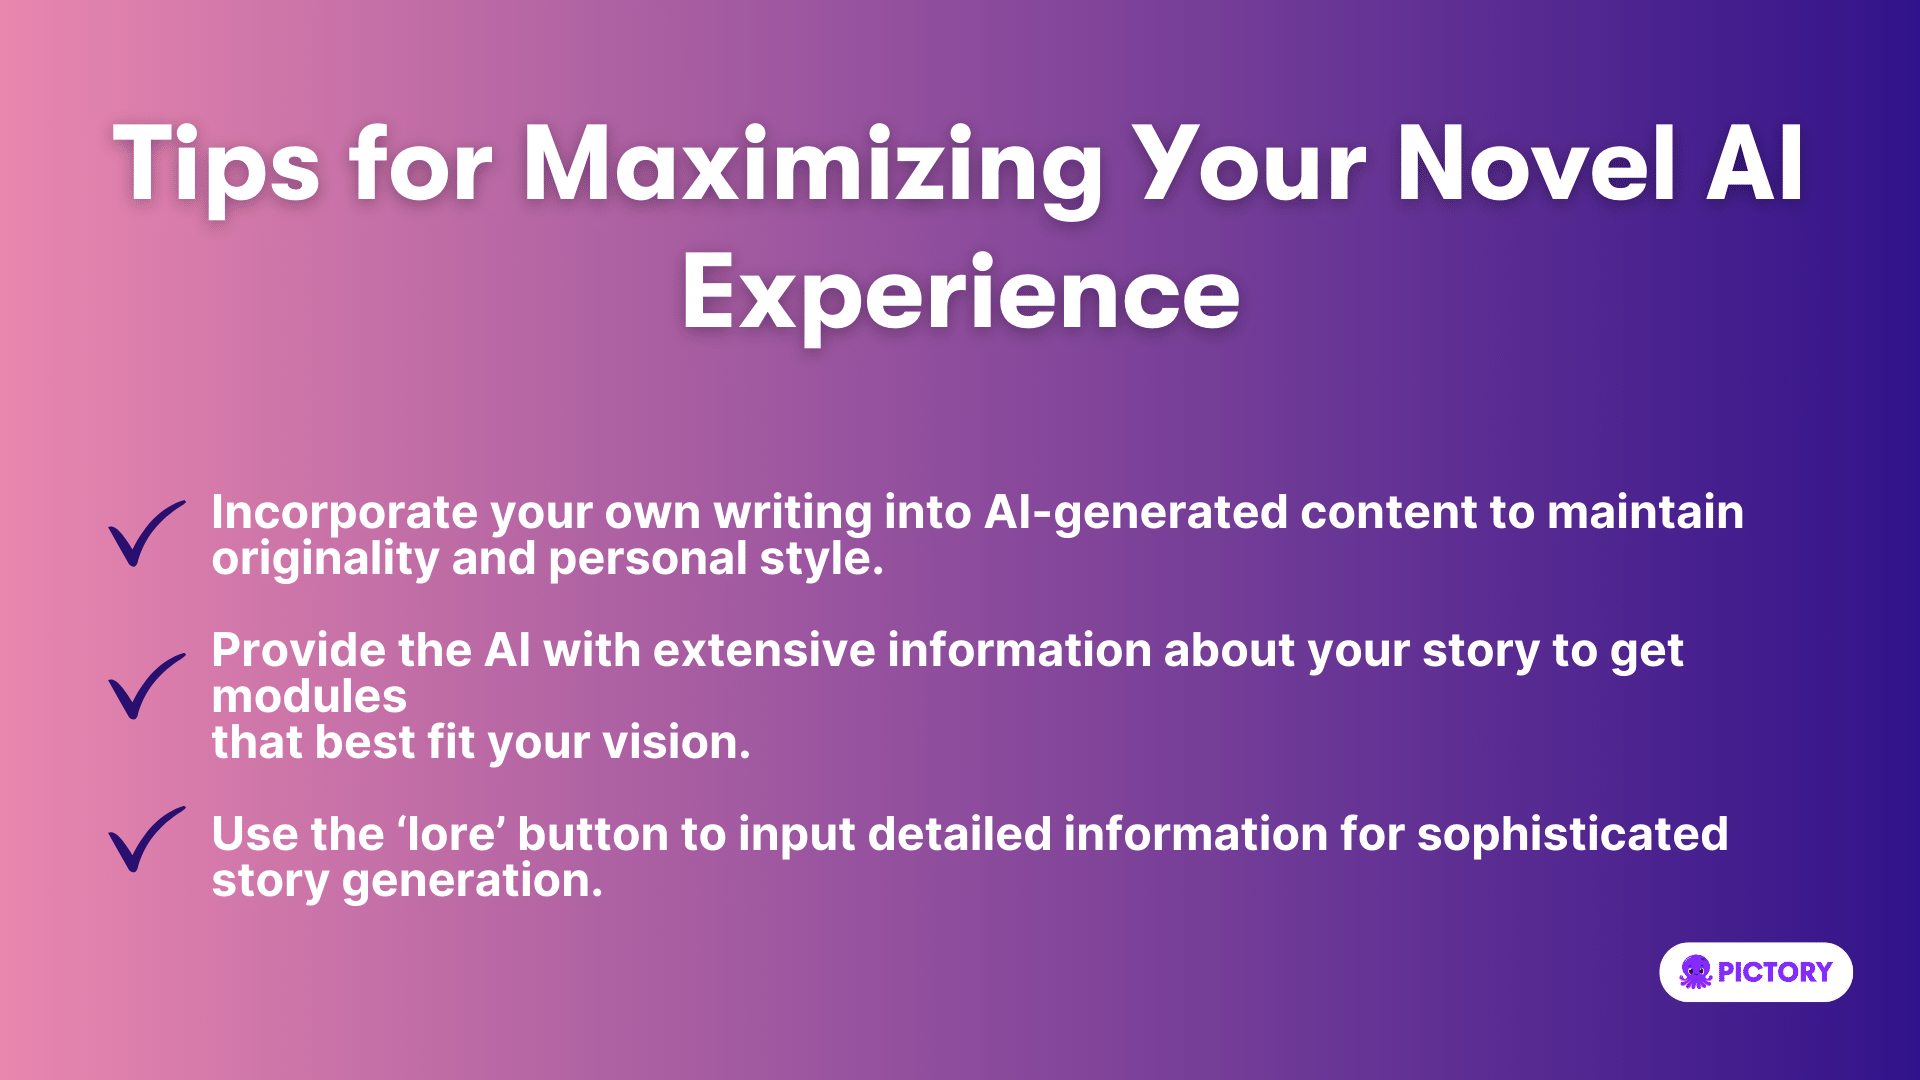 Tips for Maximizing Your Novel AI Experience